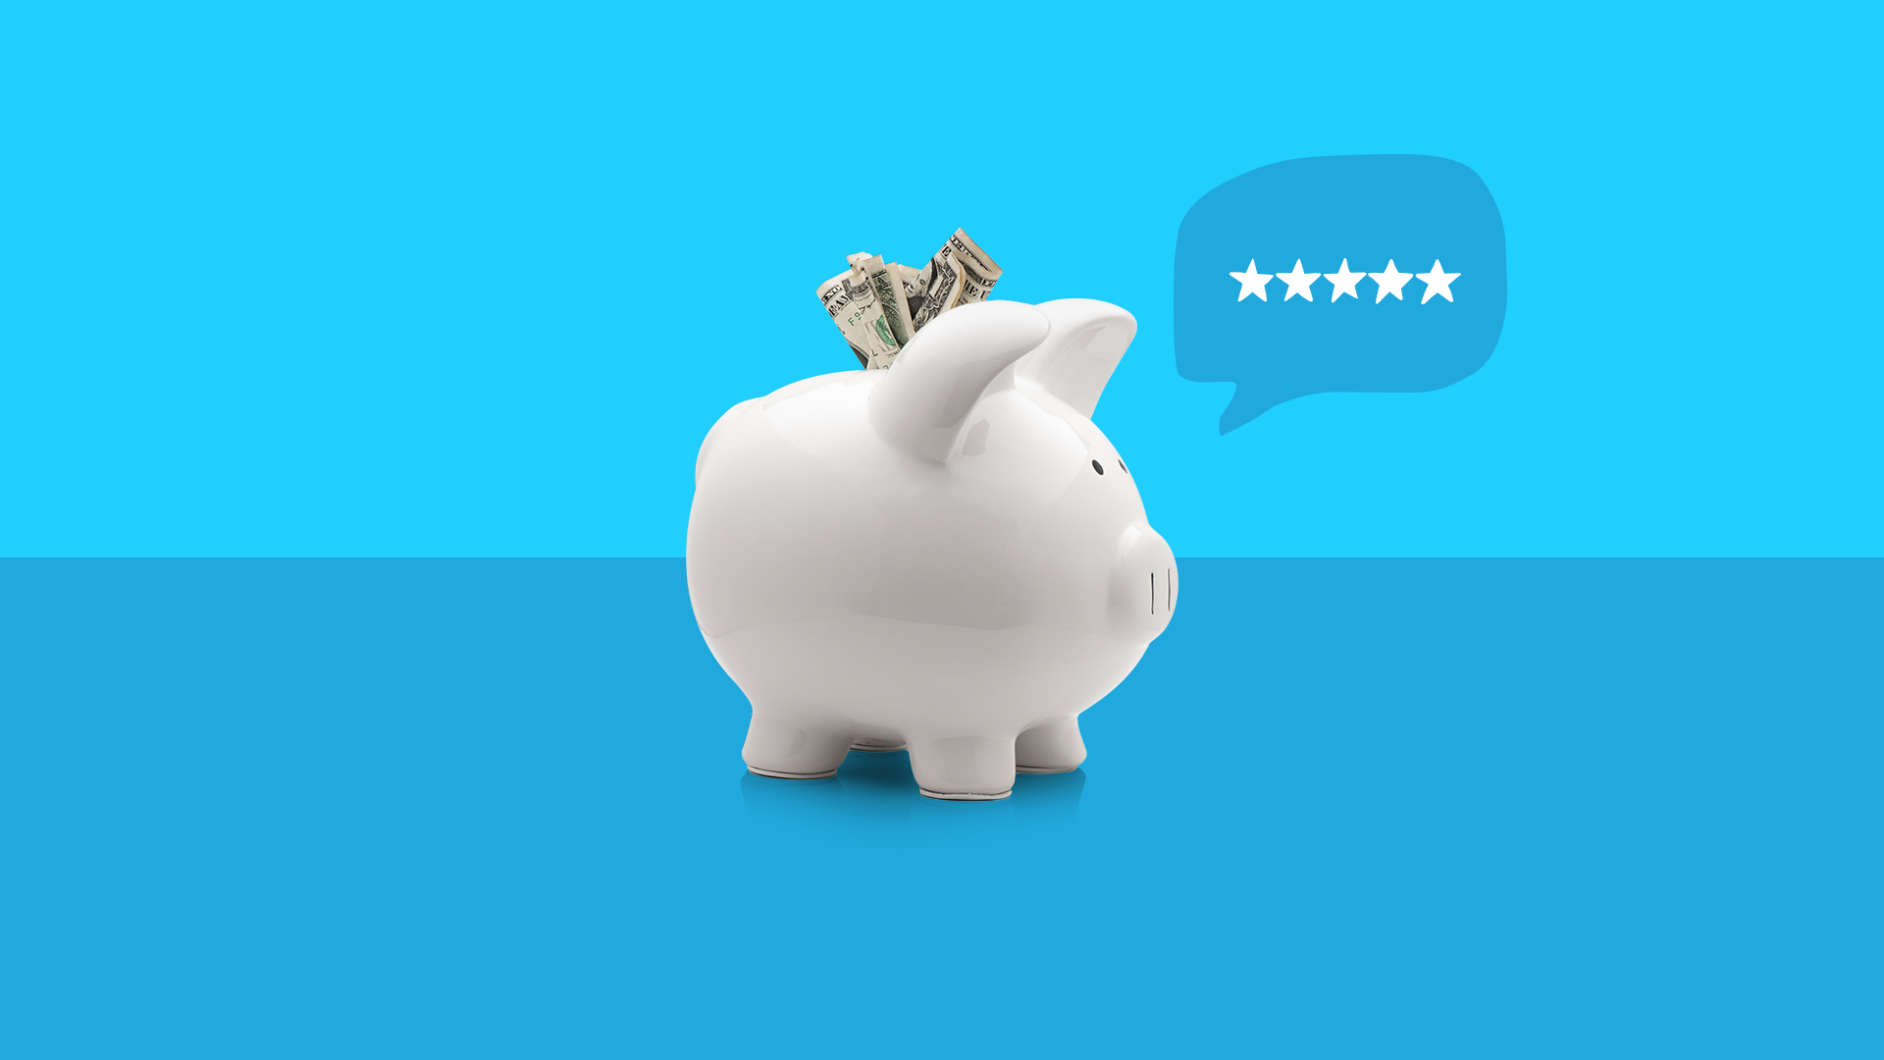 A piggy bank with a conversation bubble represents SingleCare reviews